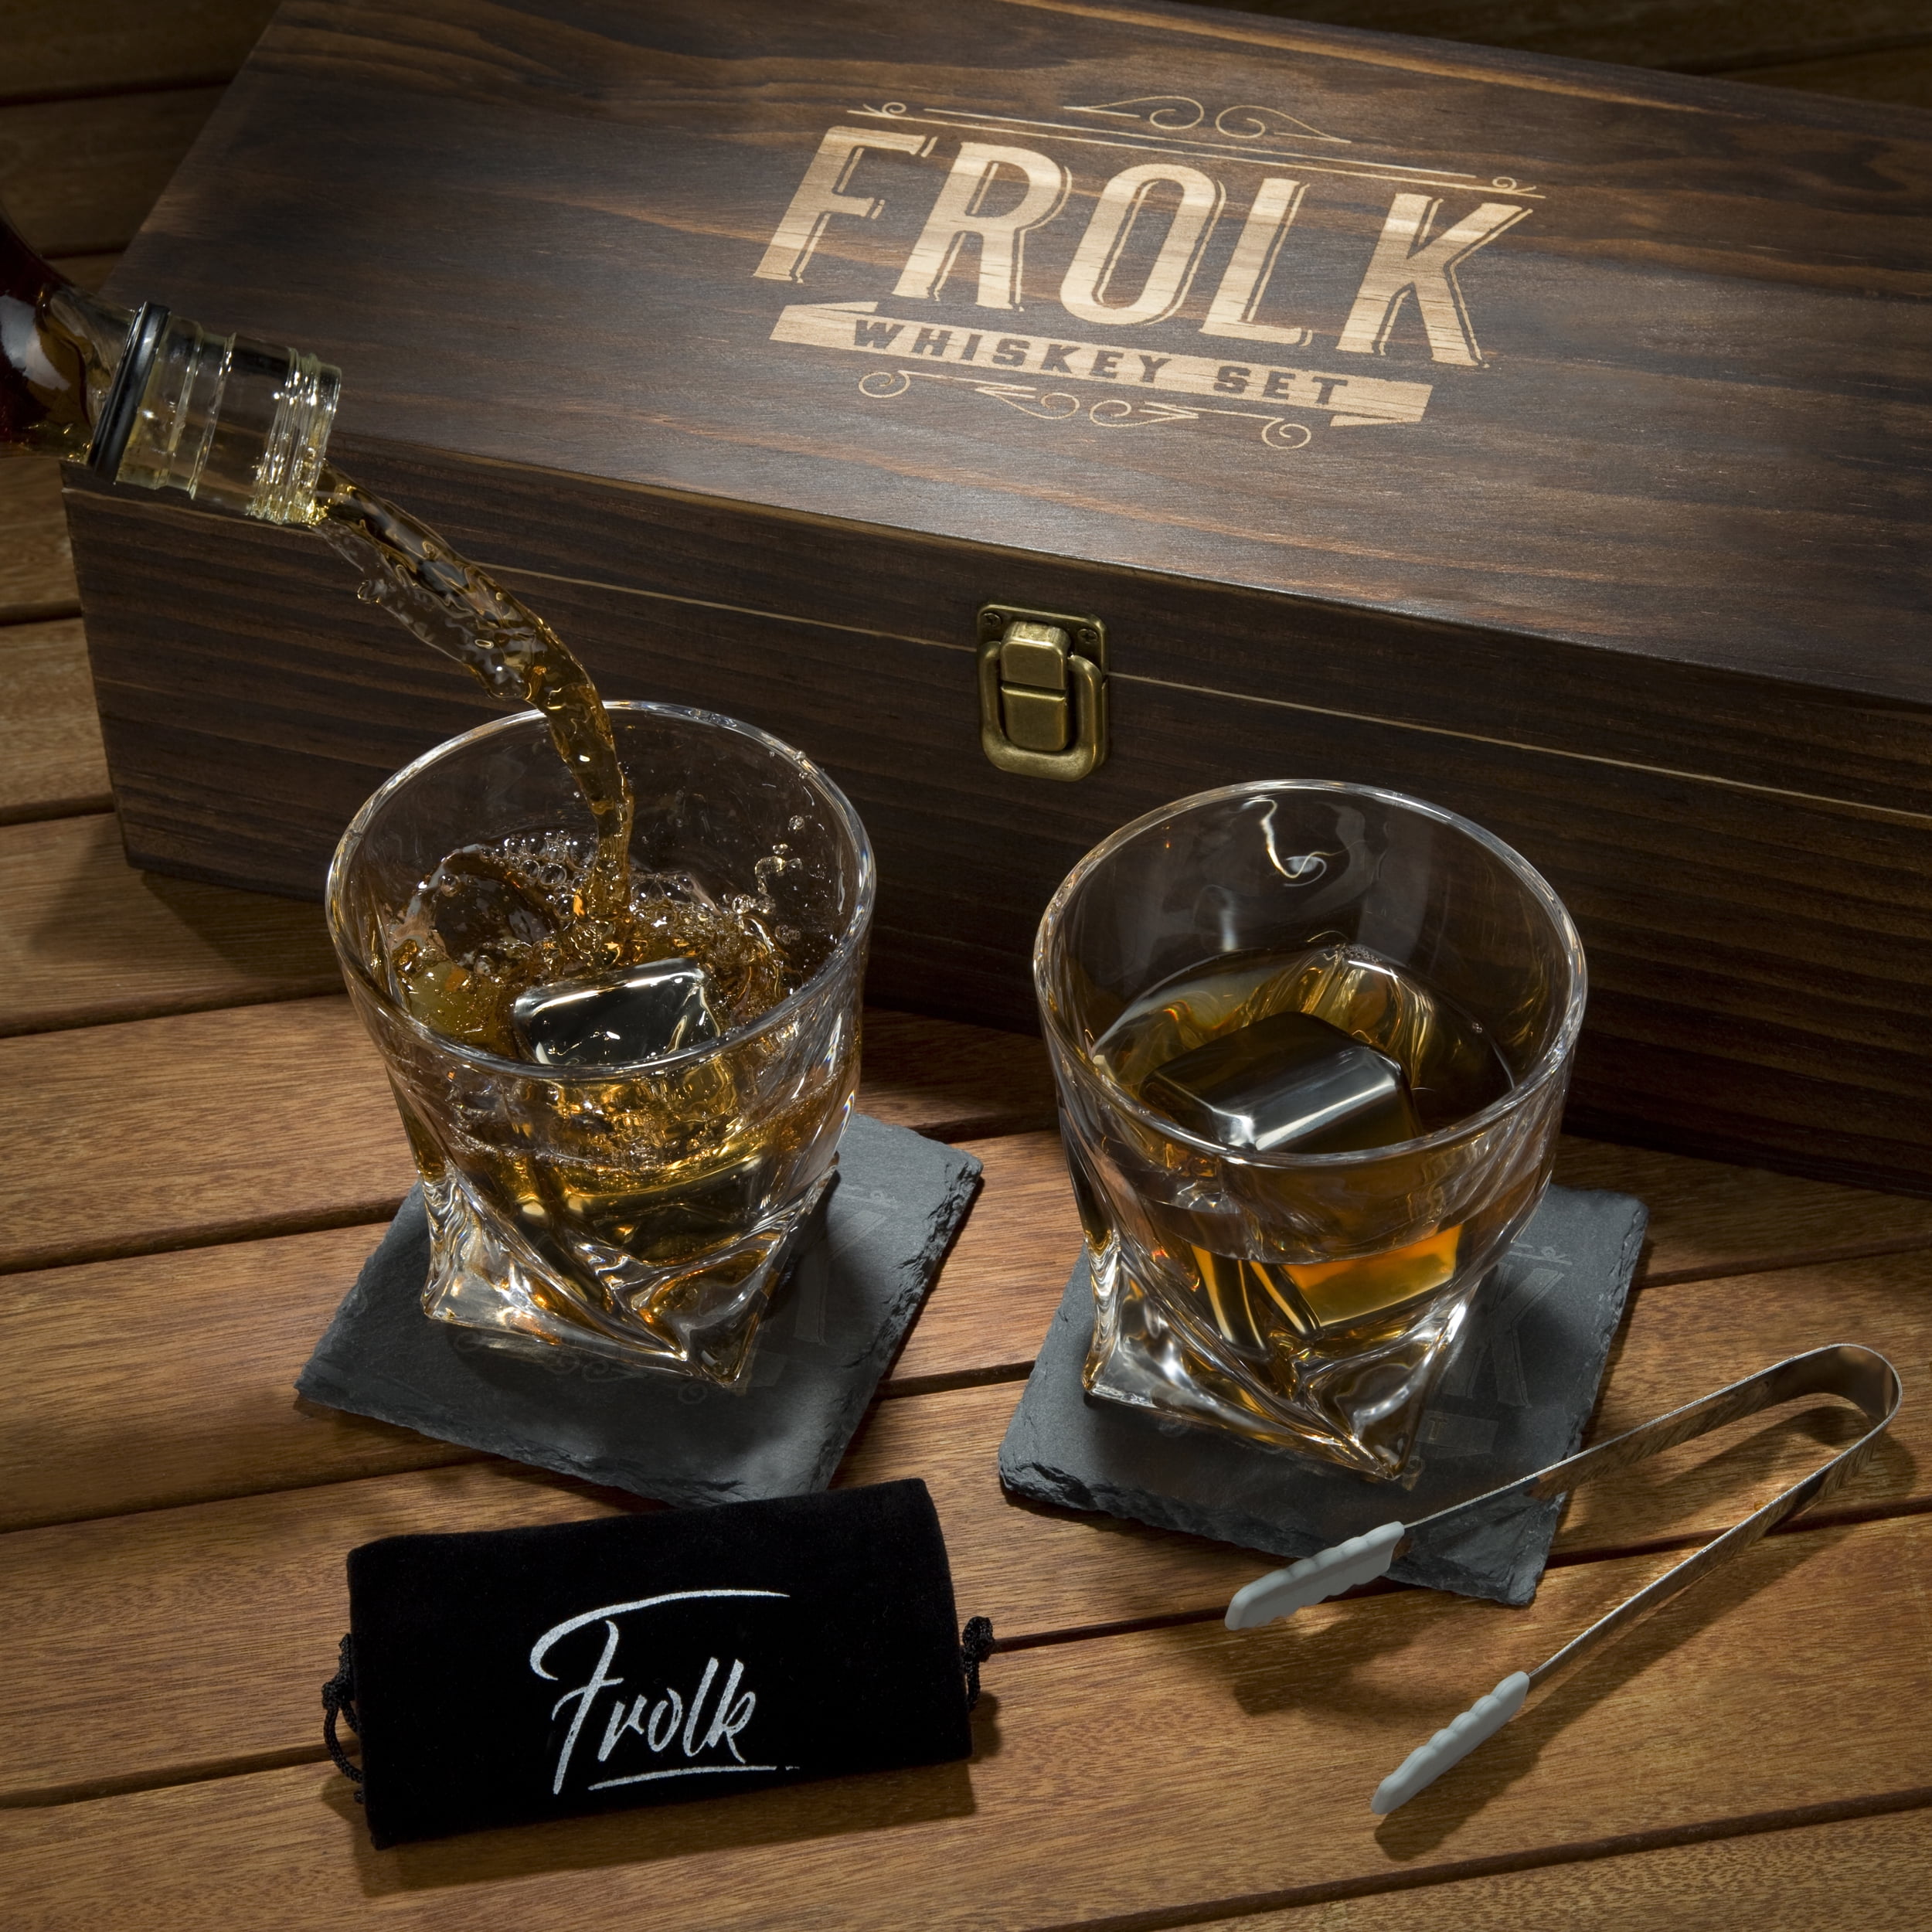 Whiskey 4 XL Cubes Gift Set - Frolk Bar Gift Sets